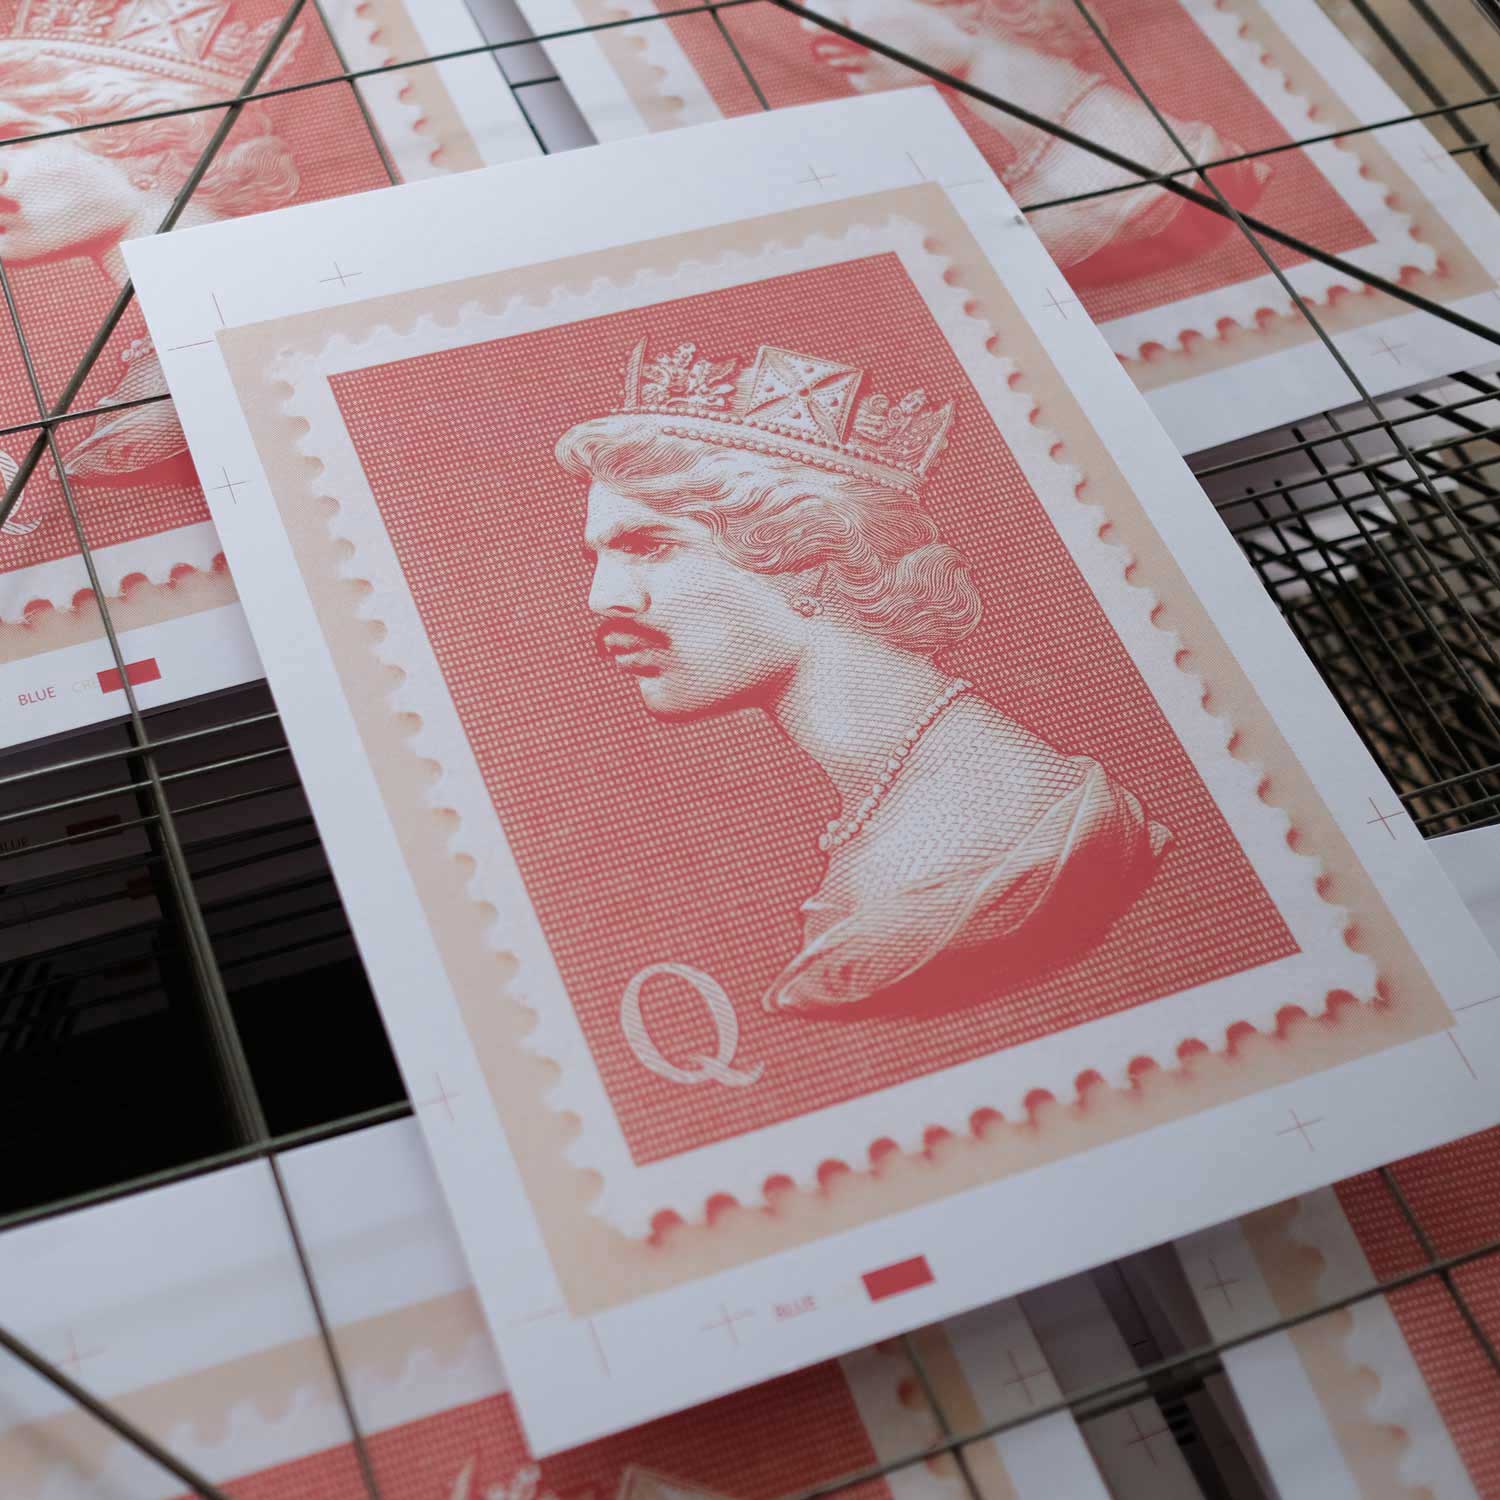 Freddie Mercury Stamp Edition Wall Art in Brick Red